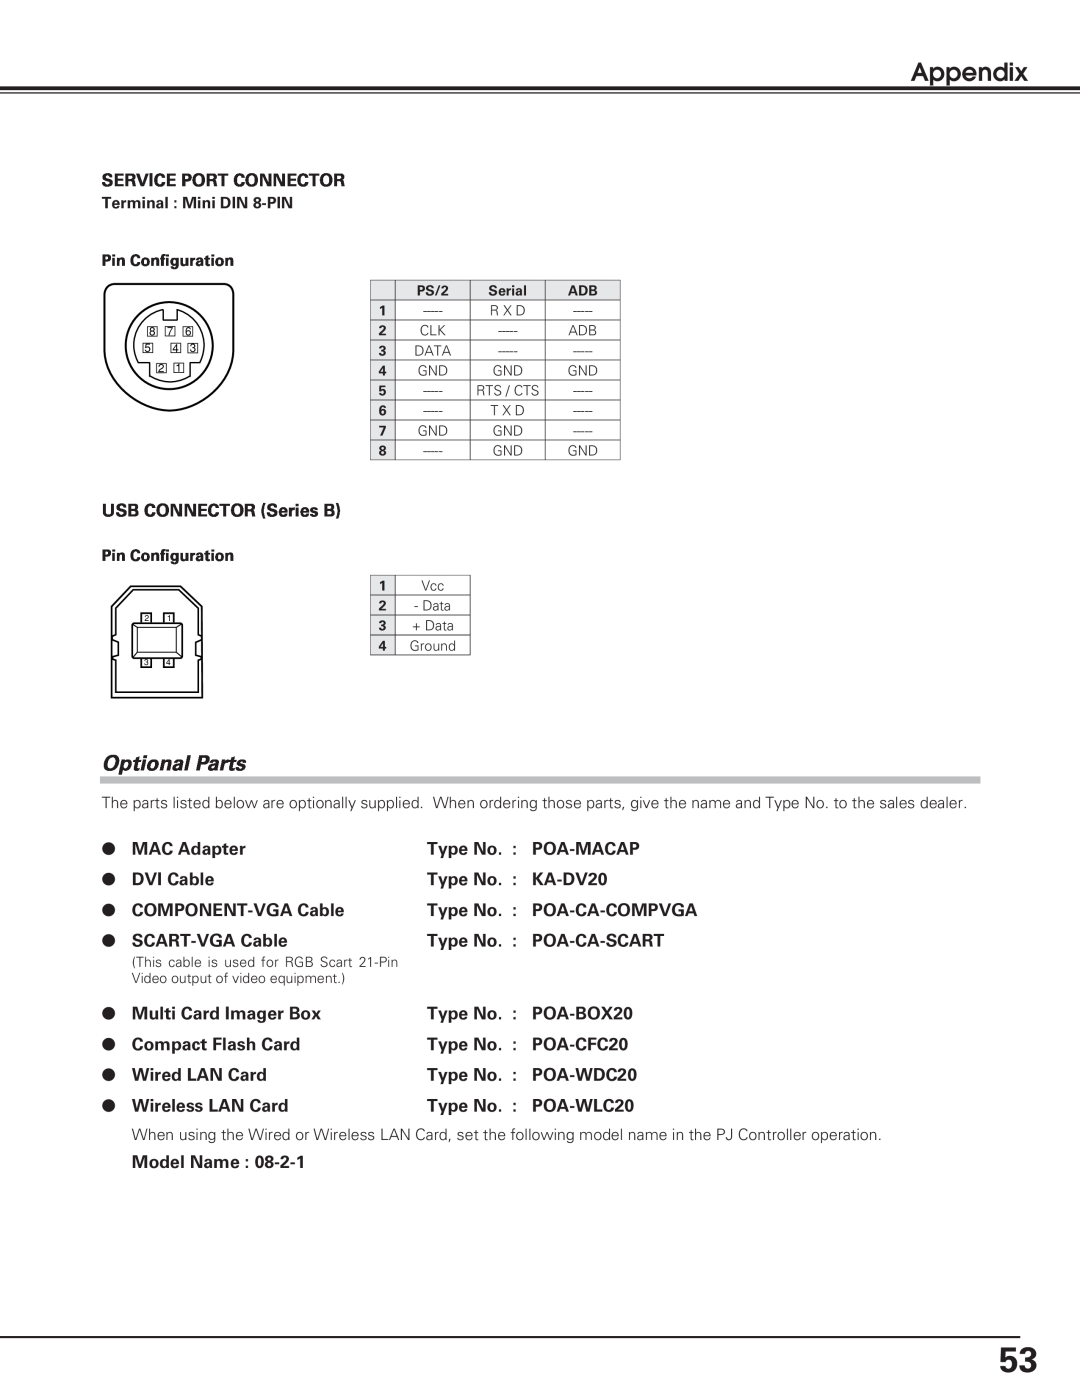 Sanyo PLC-SL20 owner manual Optional Parts, Appendix, Terminal Mini DIN 8-PIN Pin Configuration 